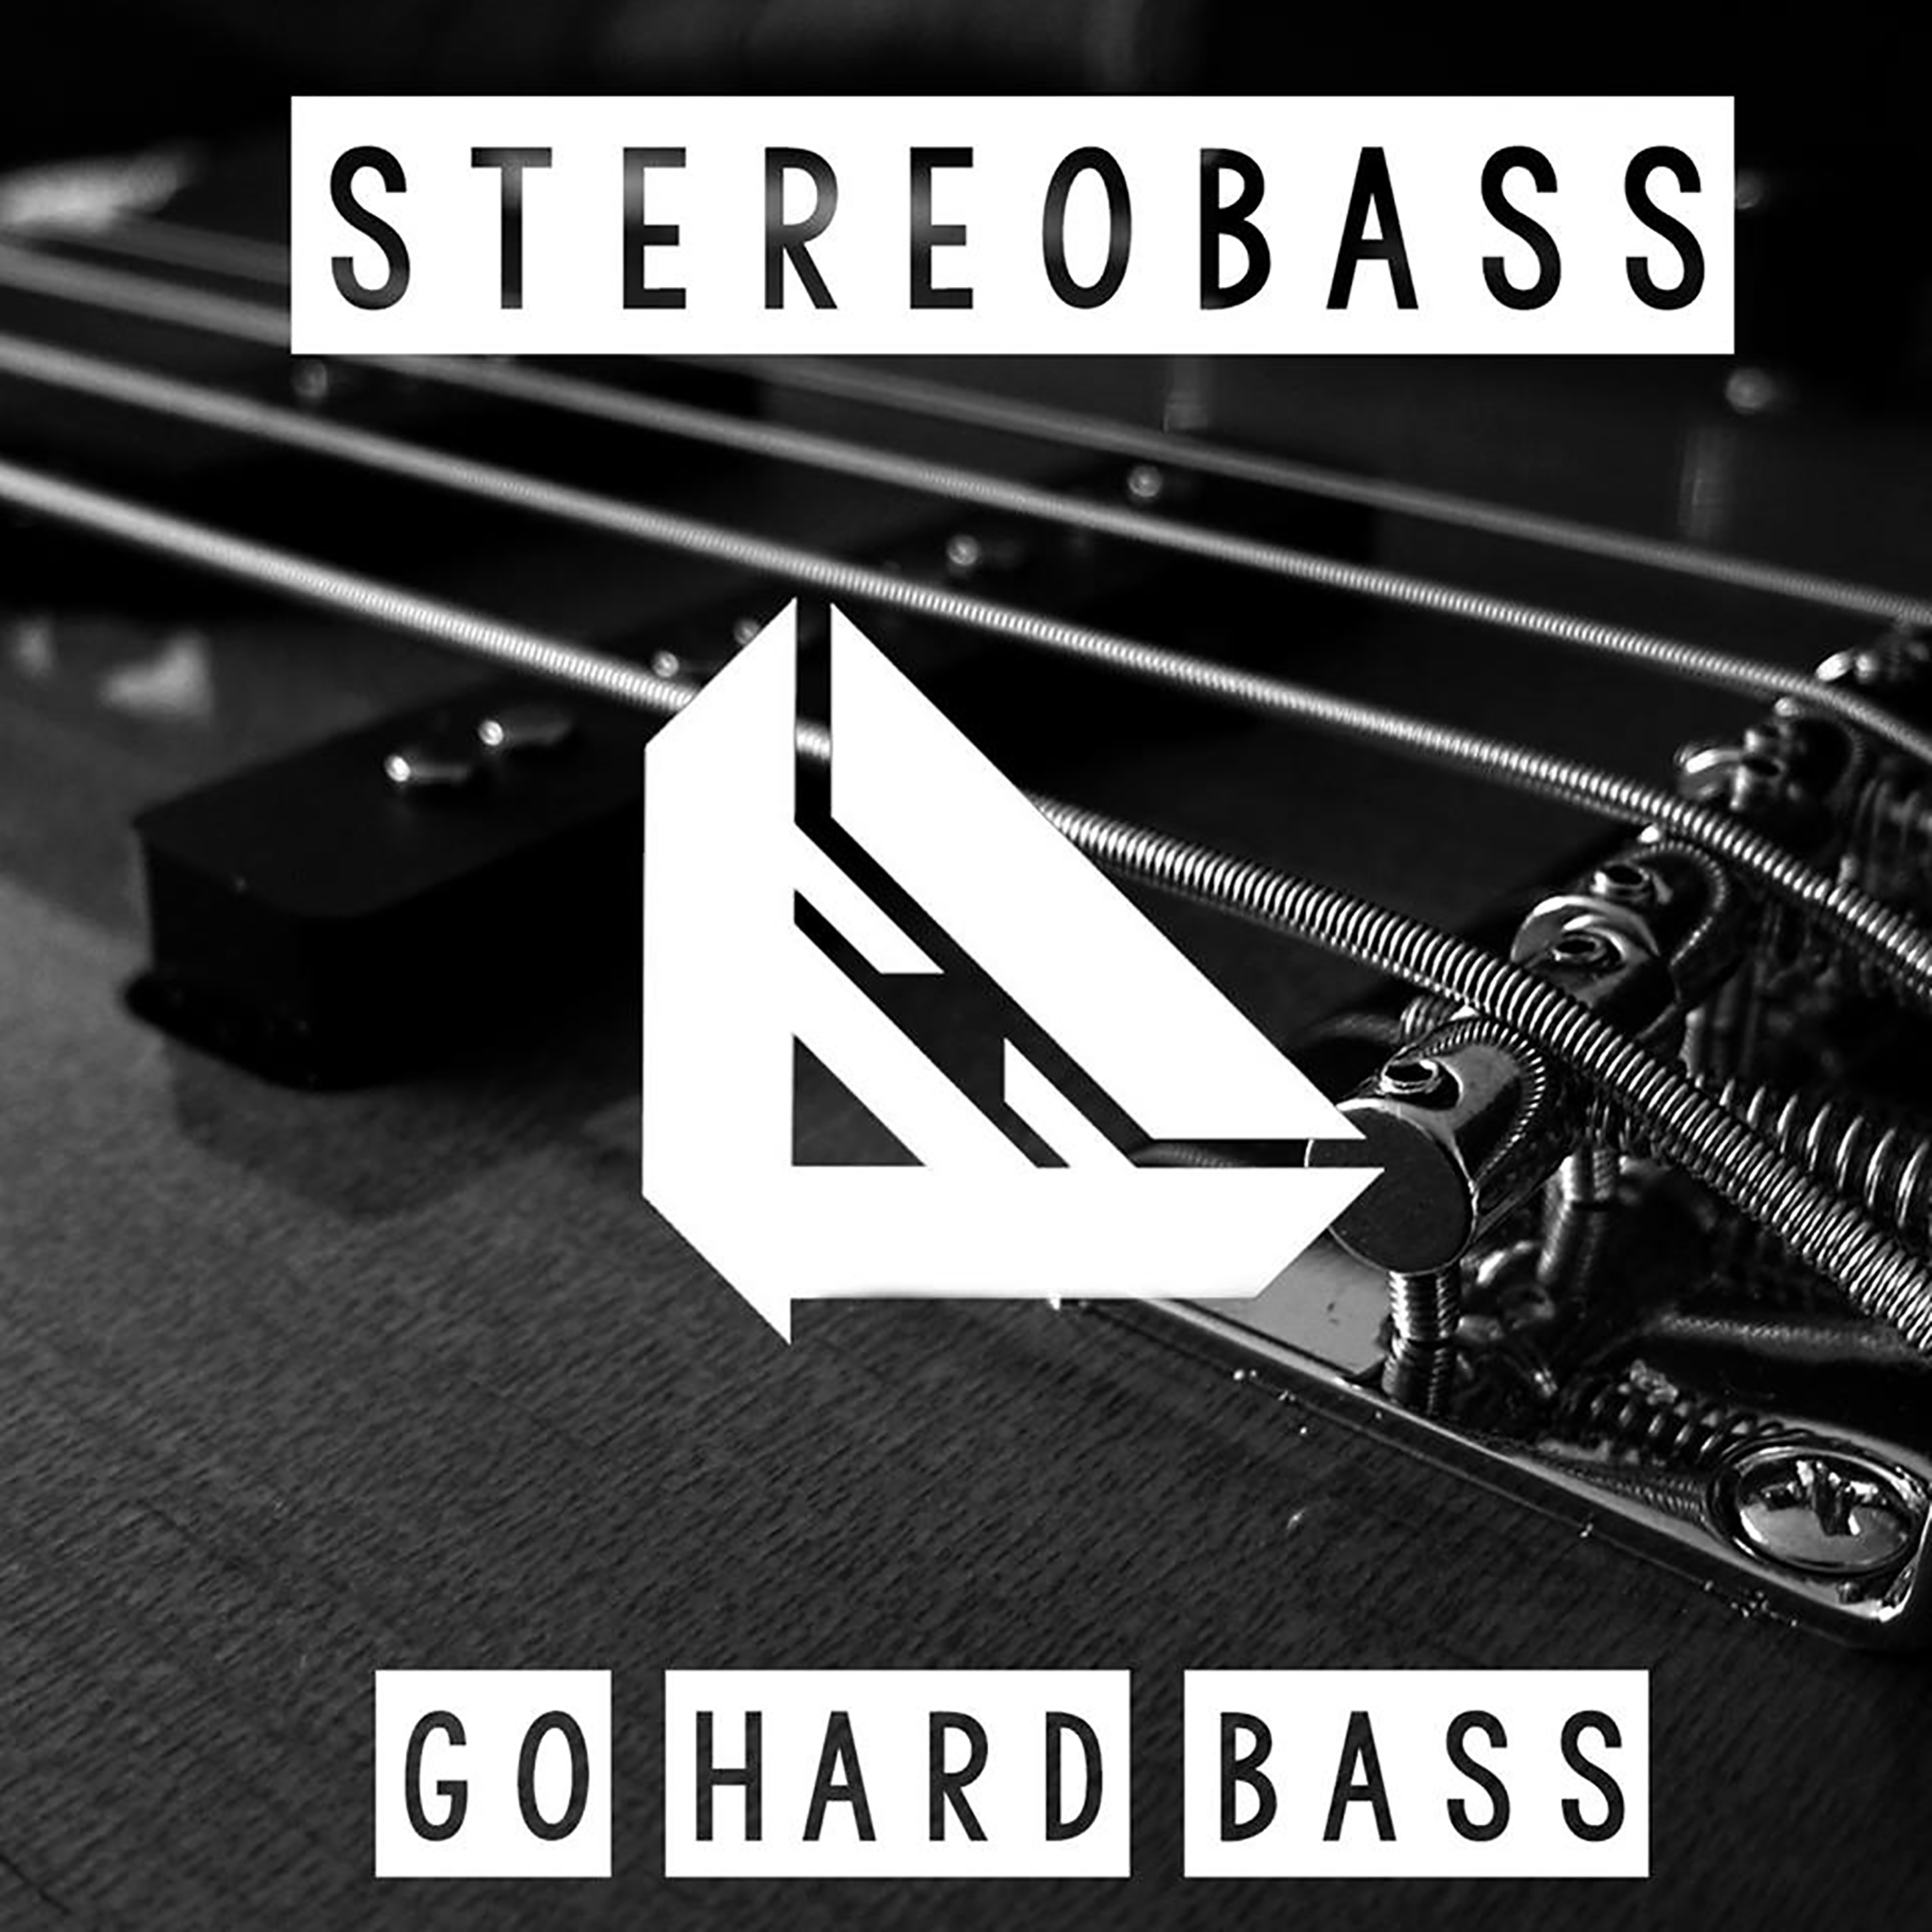 Песня хард басс. Жесткий басс. Go hard текст. Музыка hard Bass. Bass фото текст.